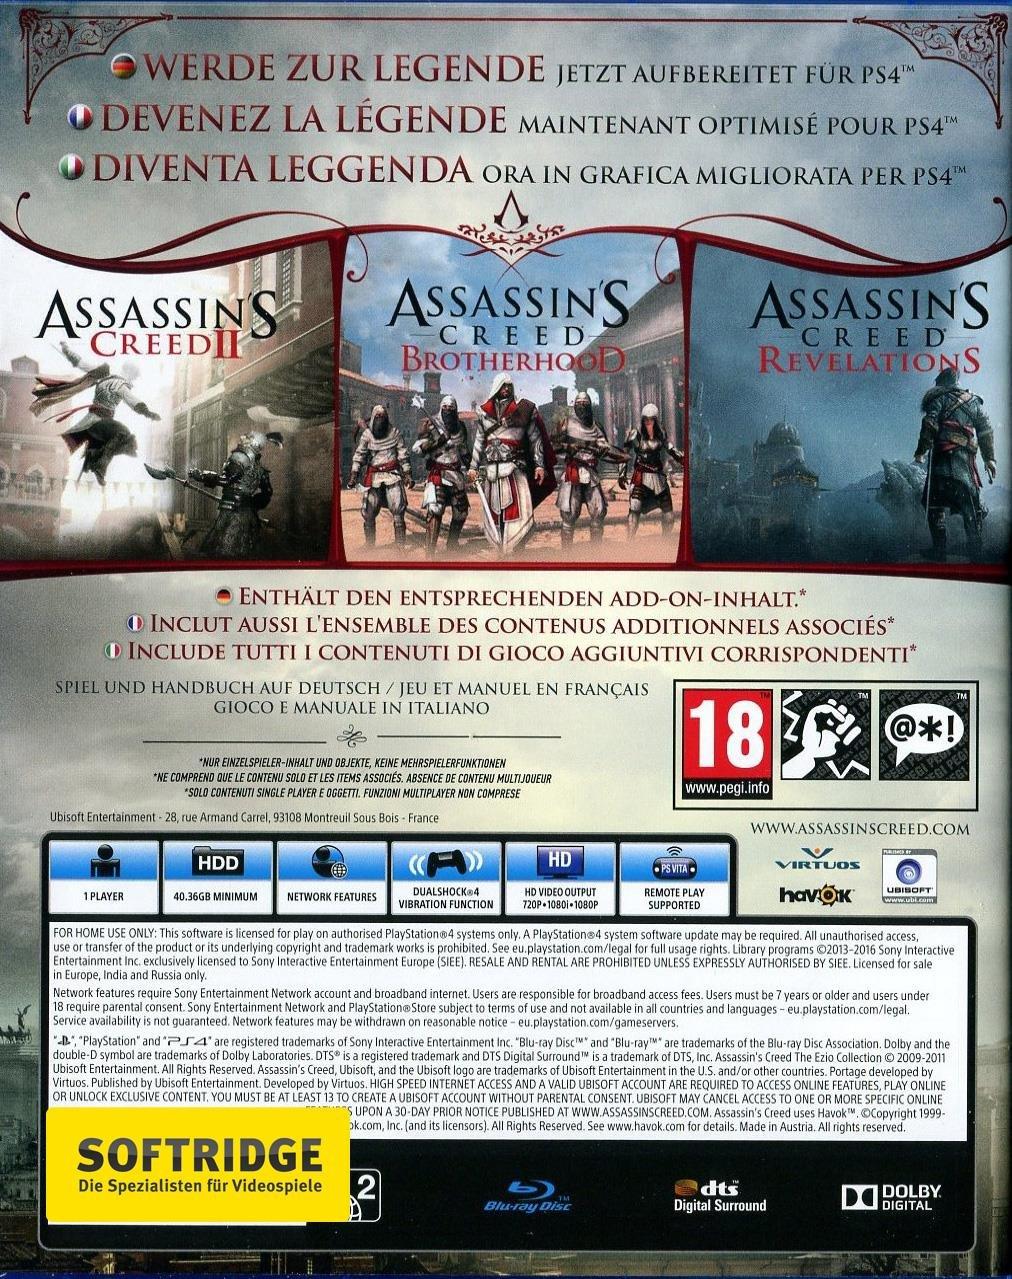 UBISOFT  Assassin's Creed: The Ezio Collection 